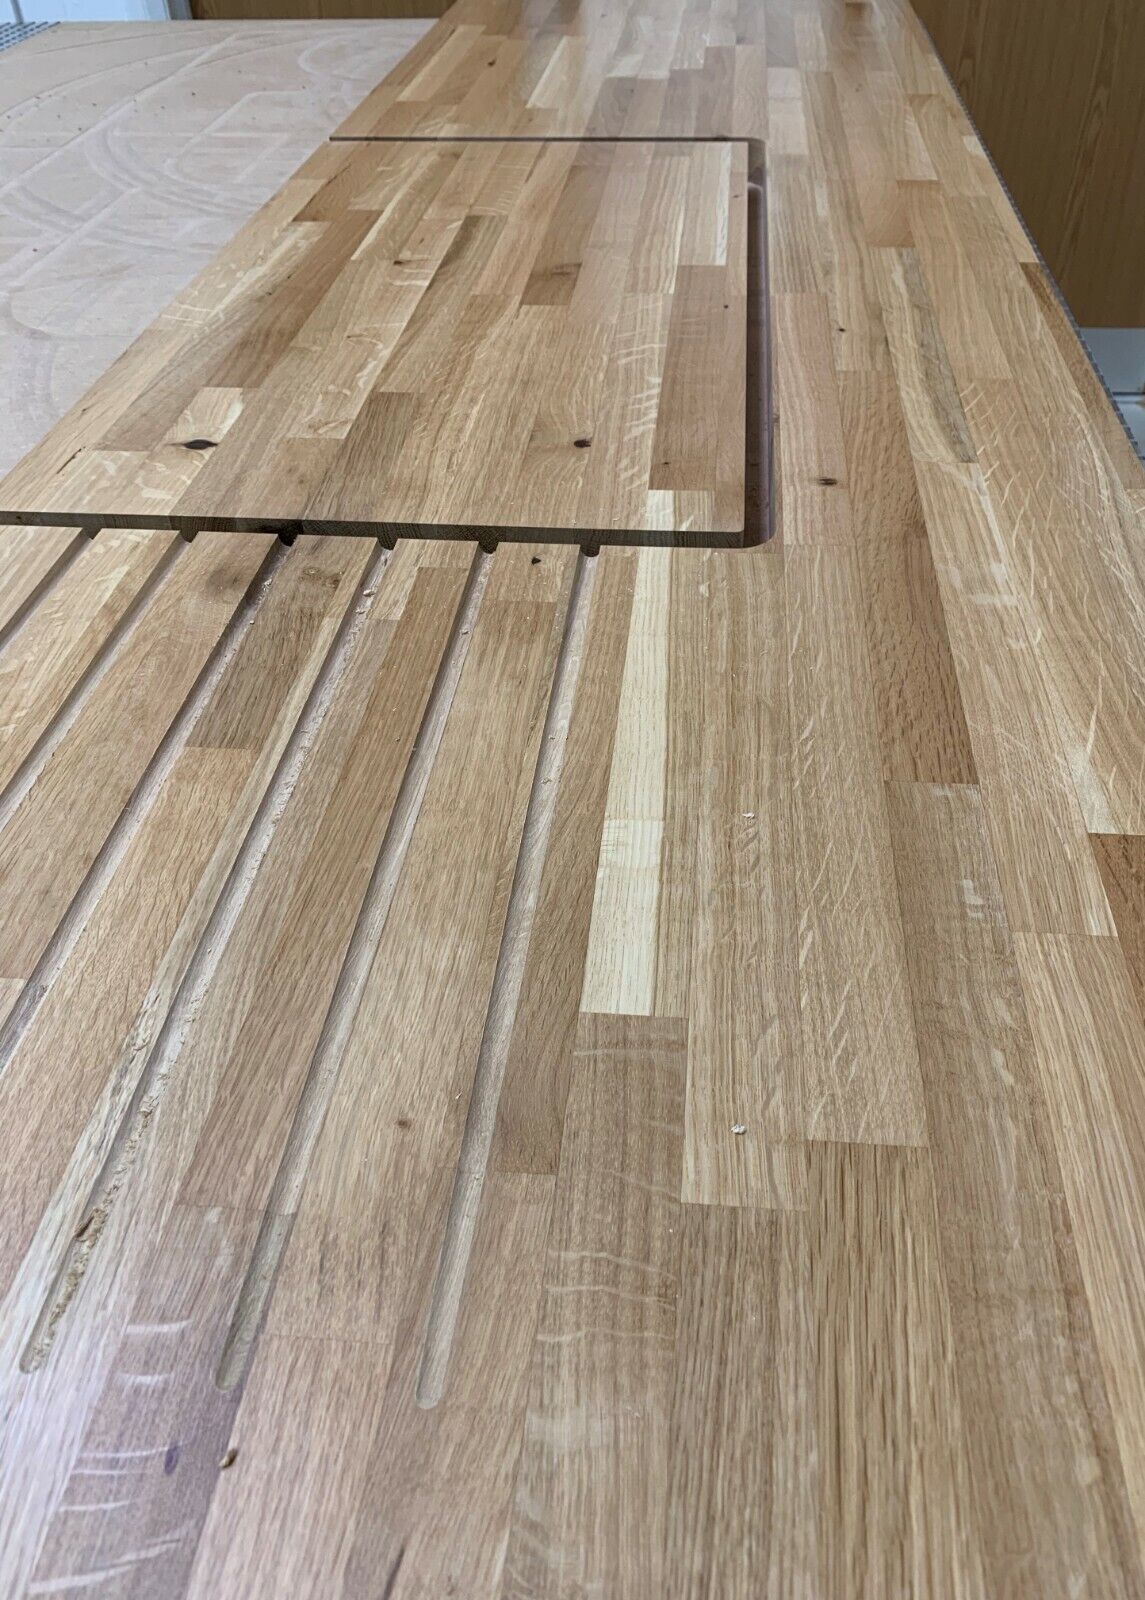 Solid Oak Kitchen Wood Worktops 2M 3M 4M